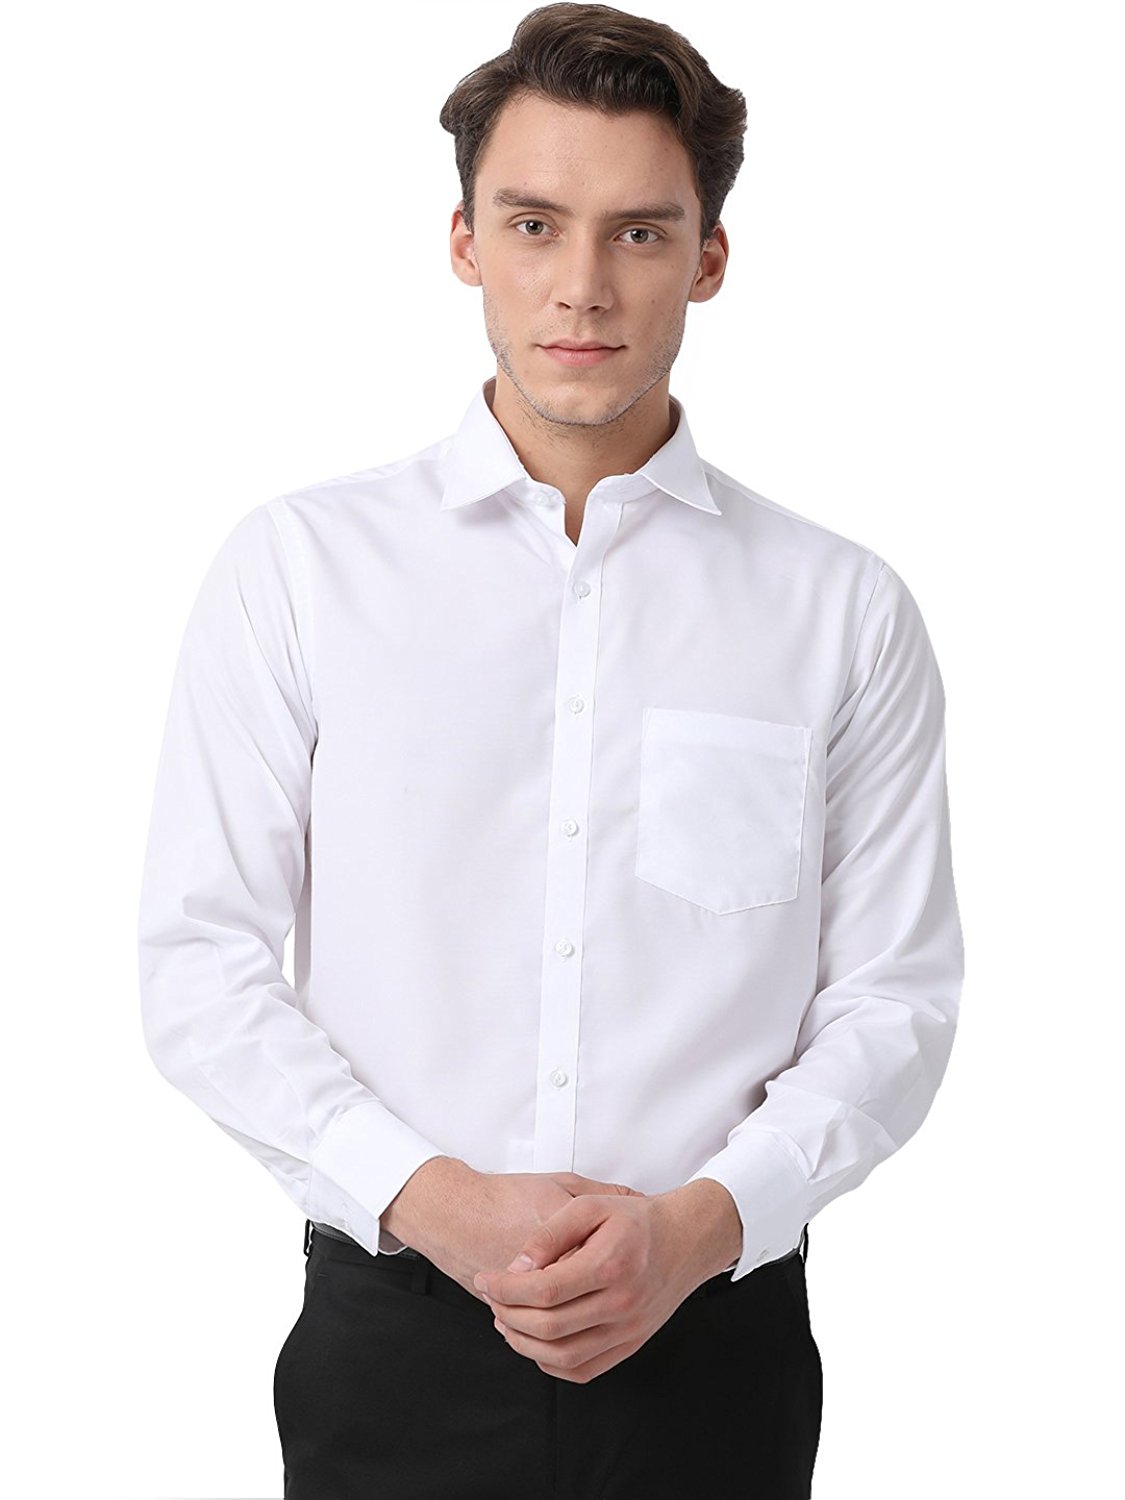 Pan American White Formal Shirts for Men's Black Color Formal Shirts